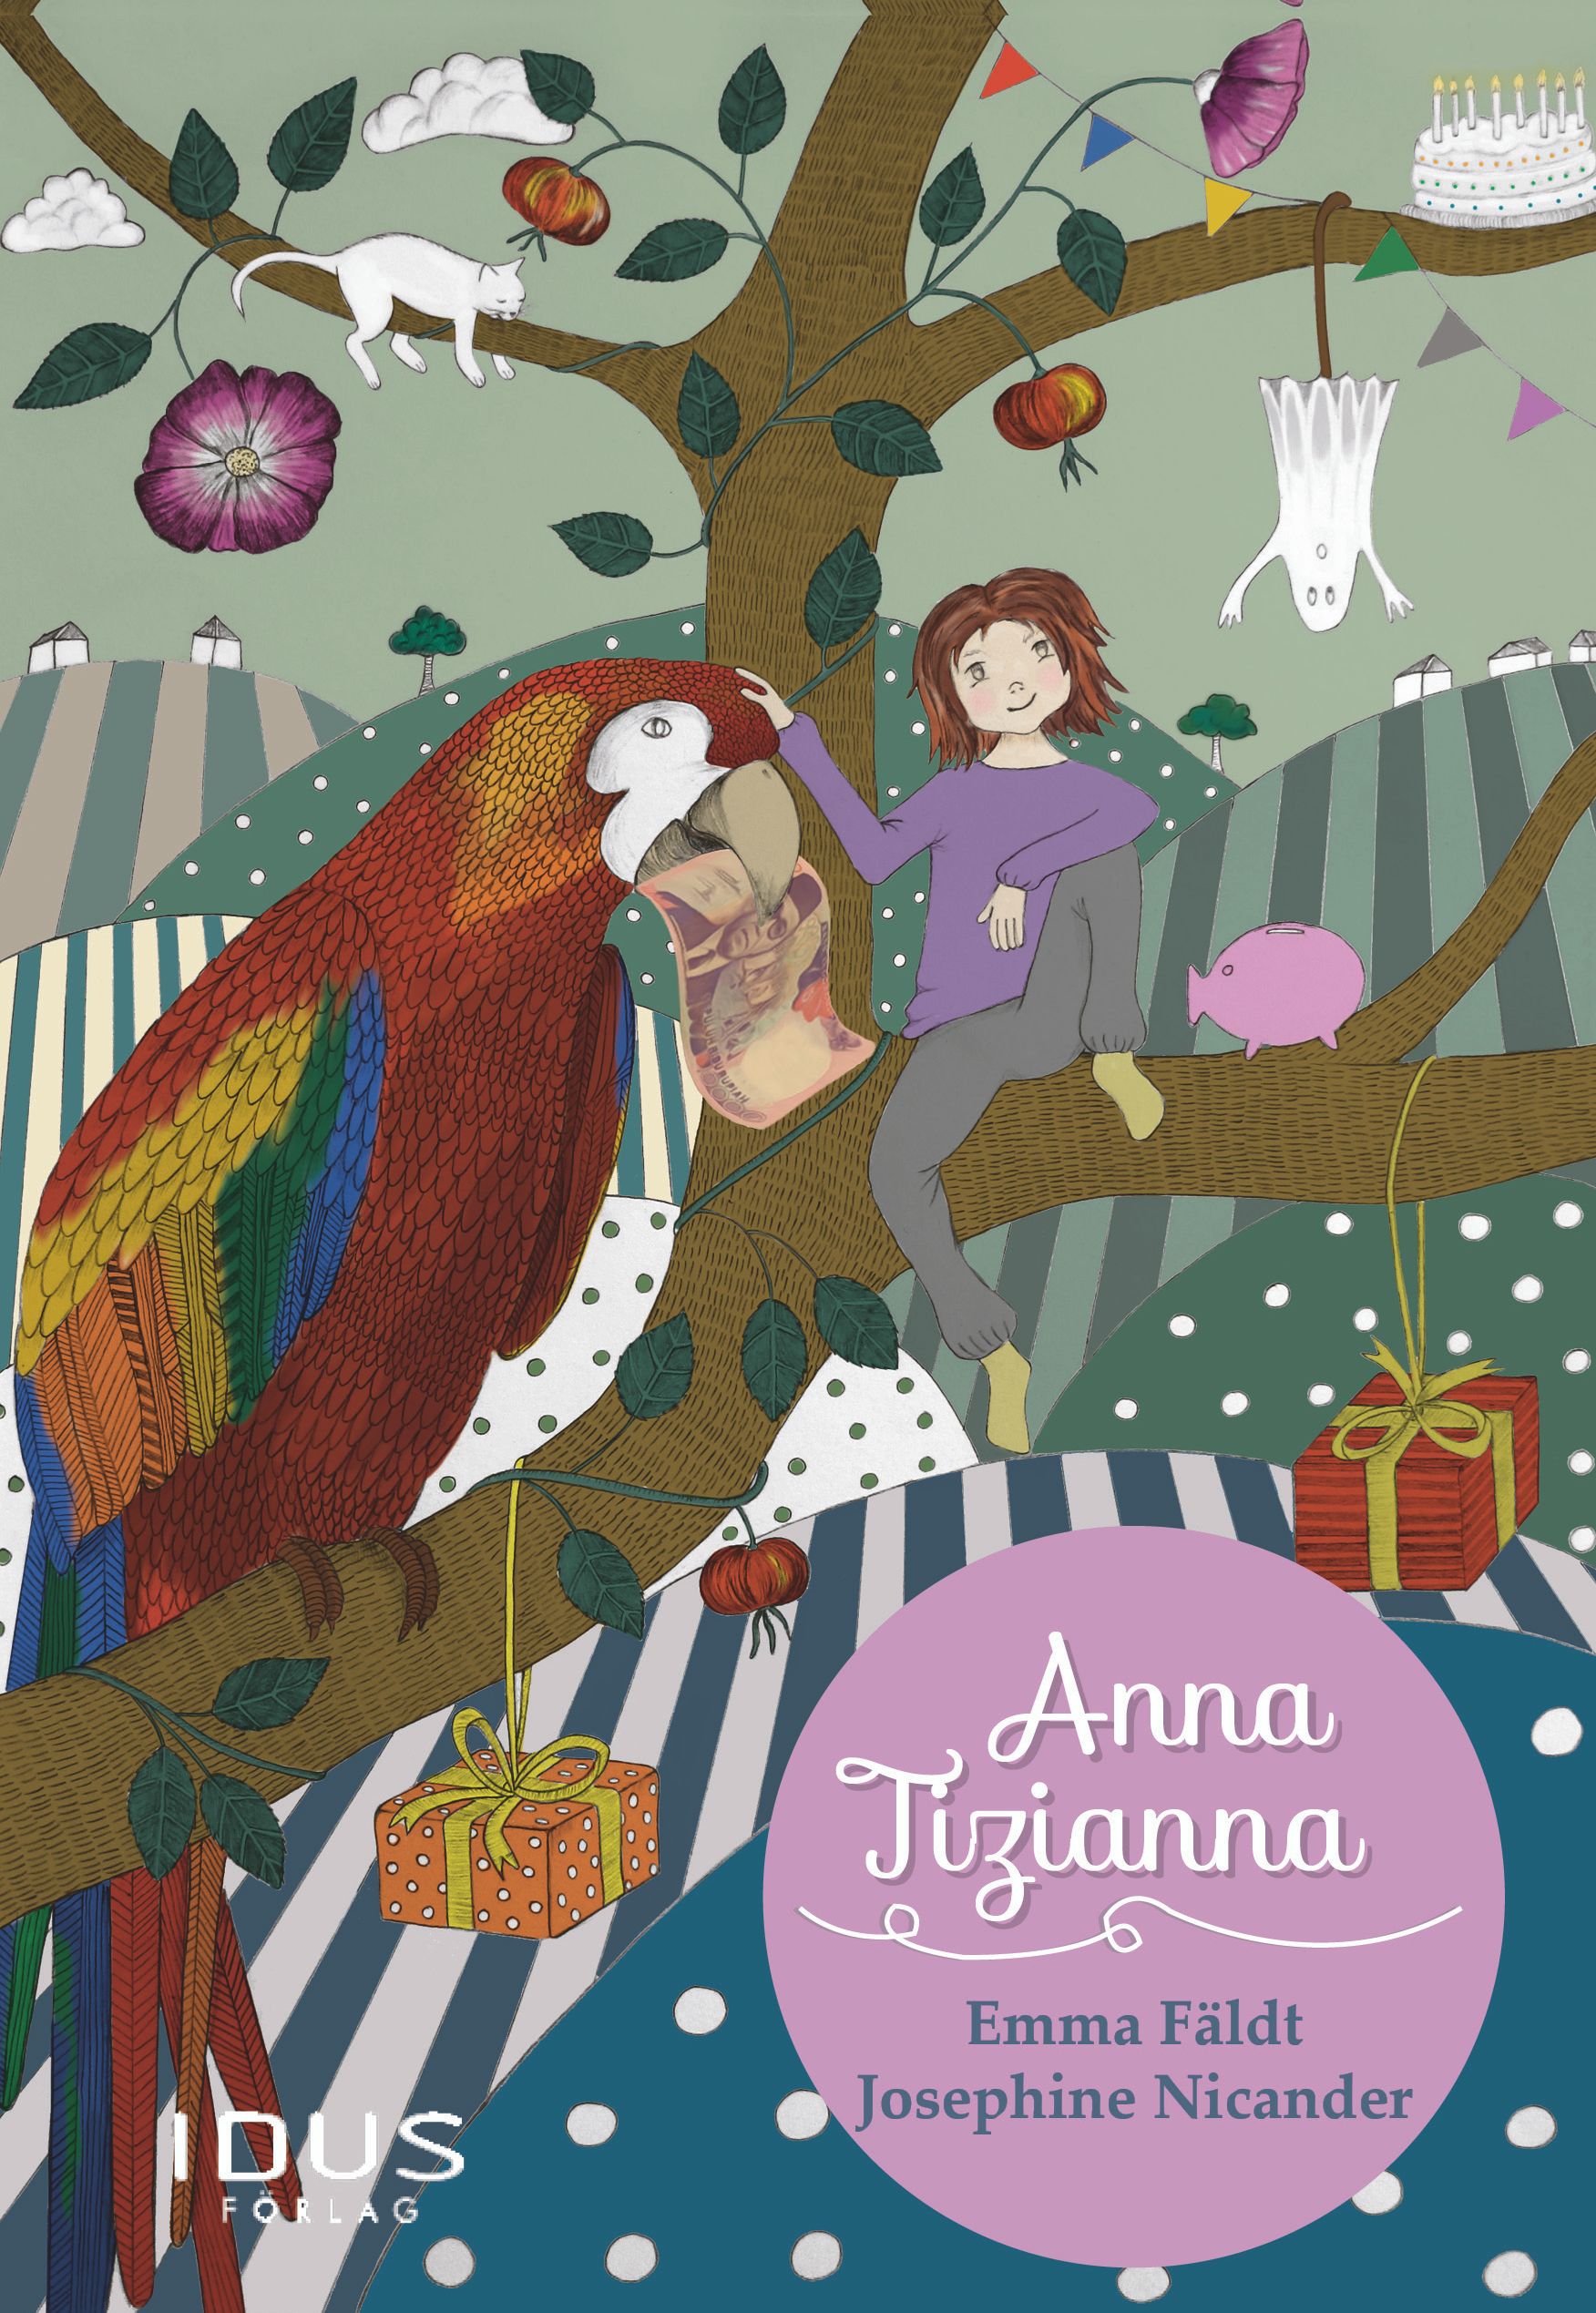 Anna Tizianna, eBook by Emma Fäldt